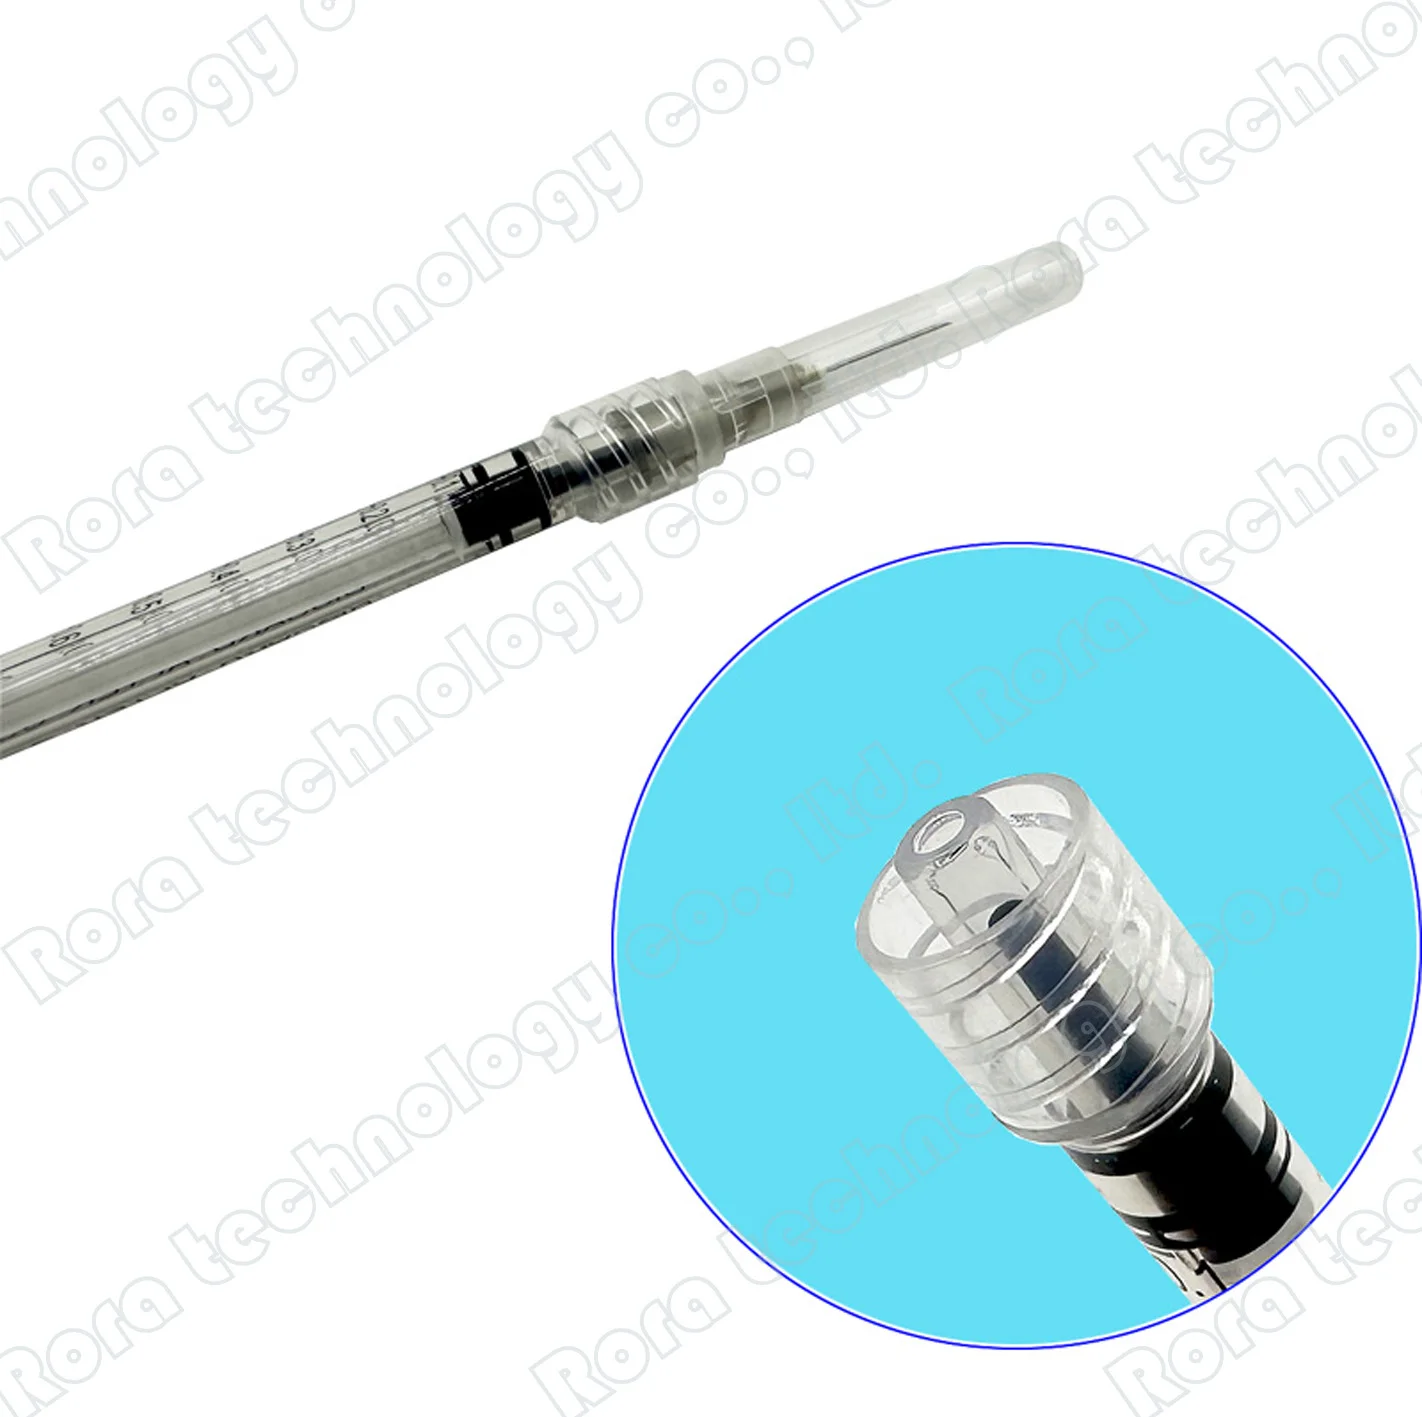 Luer Lock Syringe 1CC/ML  ,Uses for Scientific Lab, Measurement and Dispensing glass syringe luer lock syringe borosilicate glass prefillable syringe 1 2 5 10 20 30 50 100ml optional capacity